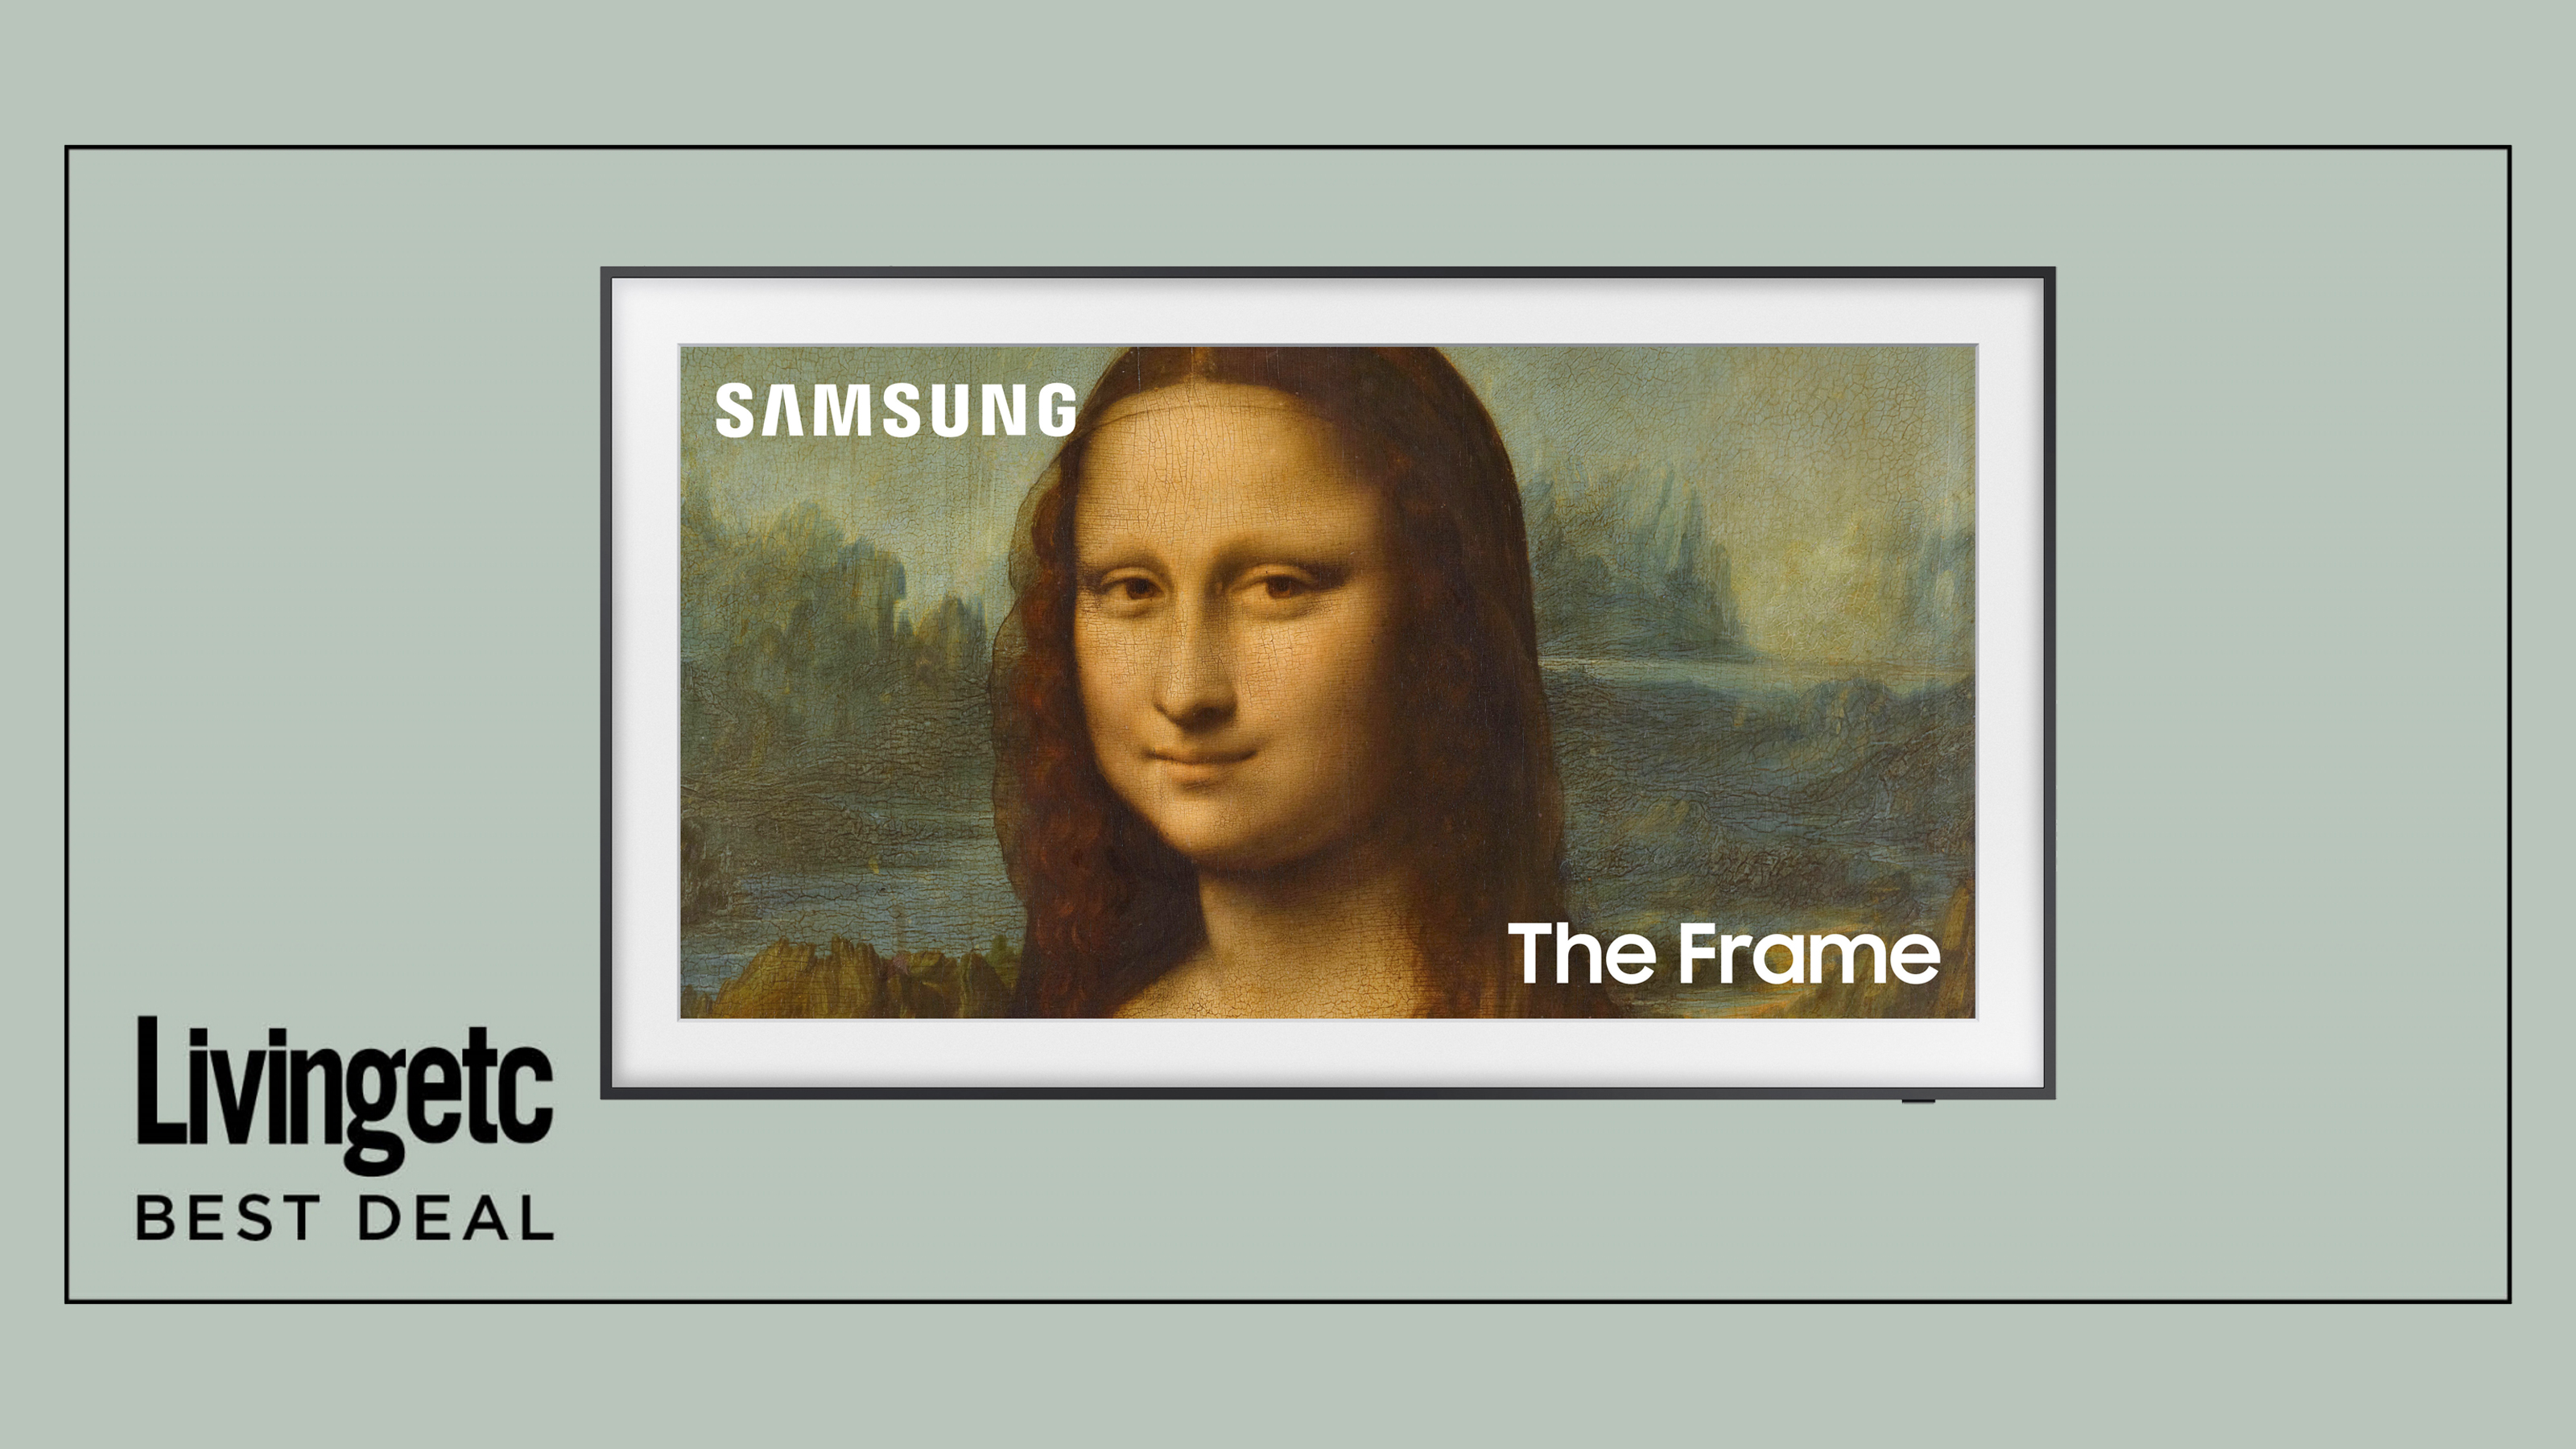 Samsung The Frame deal